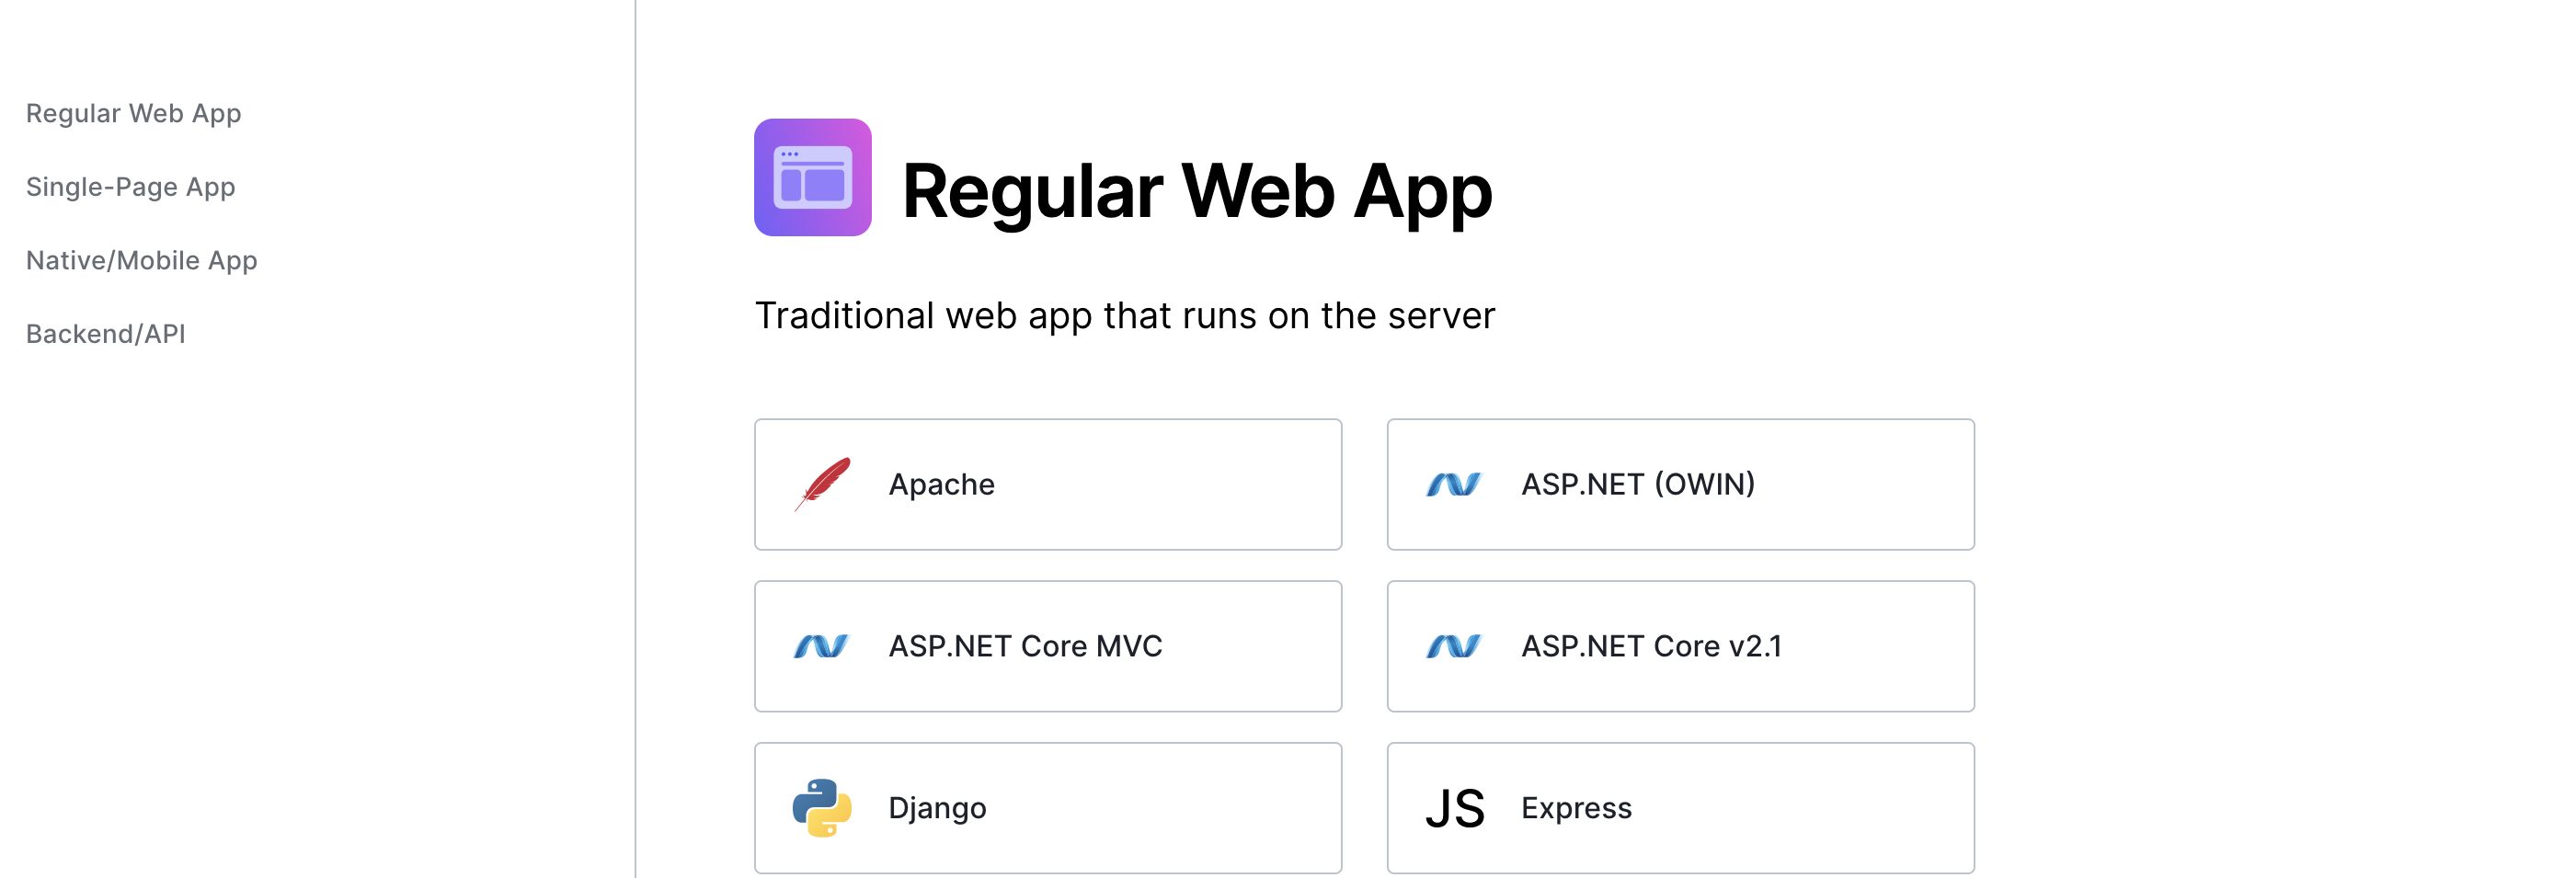 screenshot of page displaying a grid of regular web app options including Apache, ASP.NET, Django, and Express